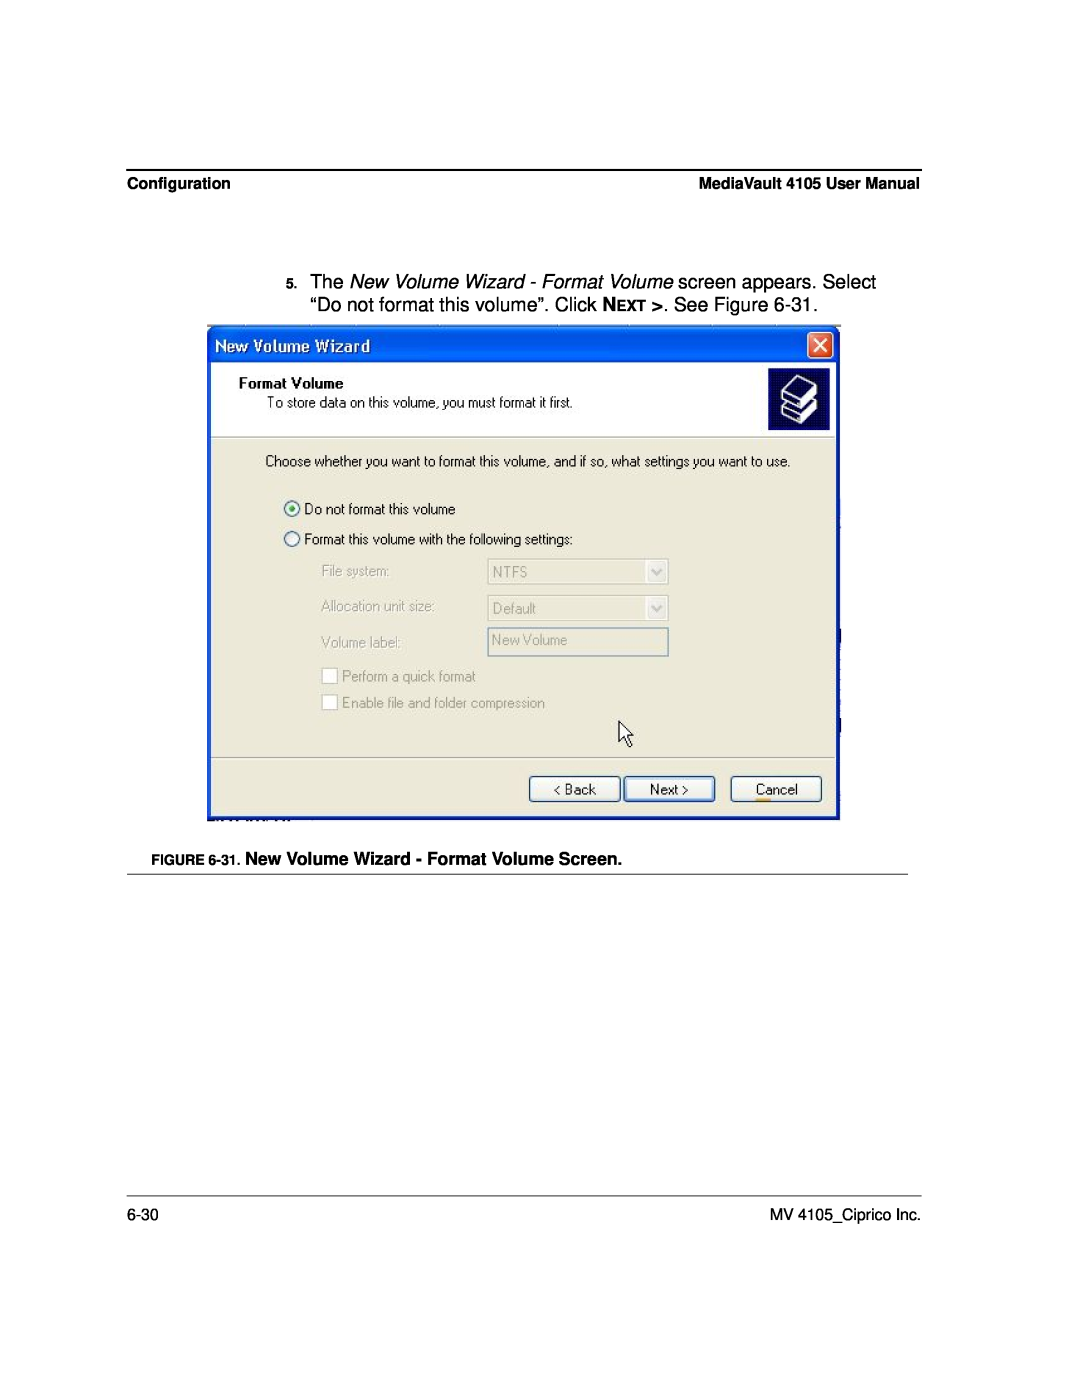 Ciprico 4105 Series user manual 31. New Volume Wizard - Format Volume Screen, MediaVault 4105 User Manual 